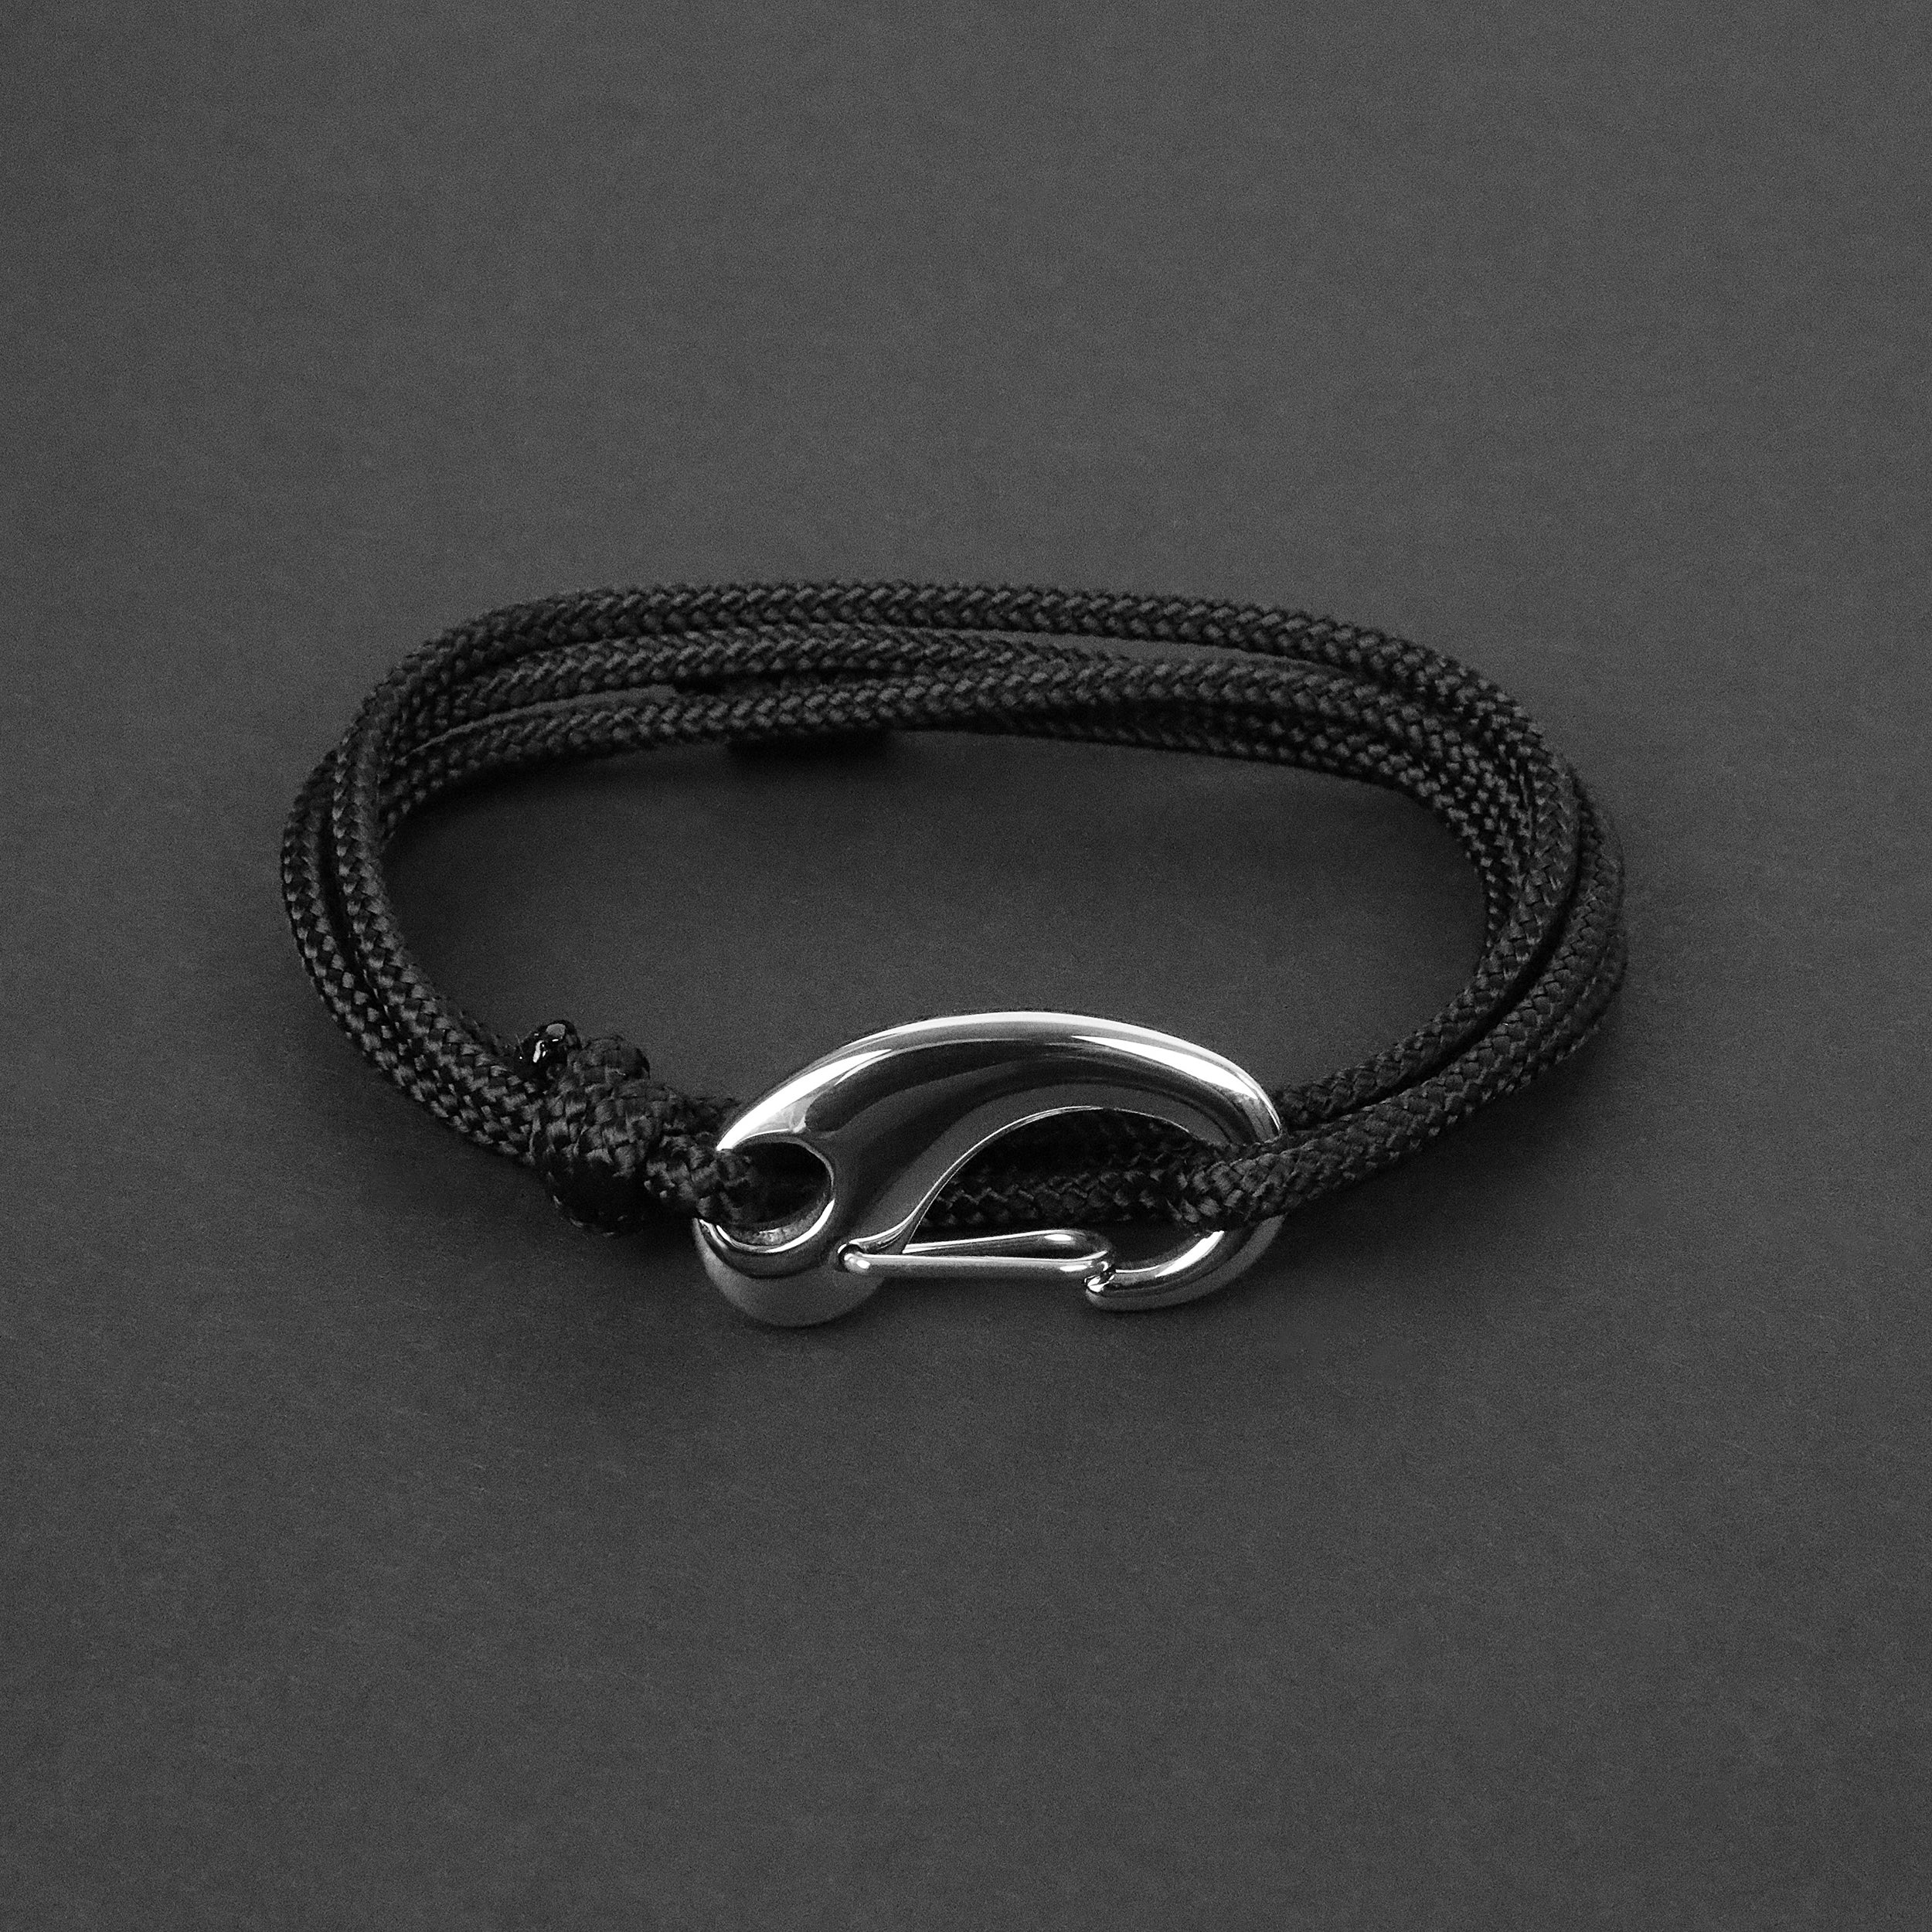 Fathom Bracelets - FATHOM Starry night nautical bracelet in all black |  Autumn look | More models on www.fathombracelets.com | Facebook